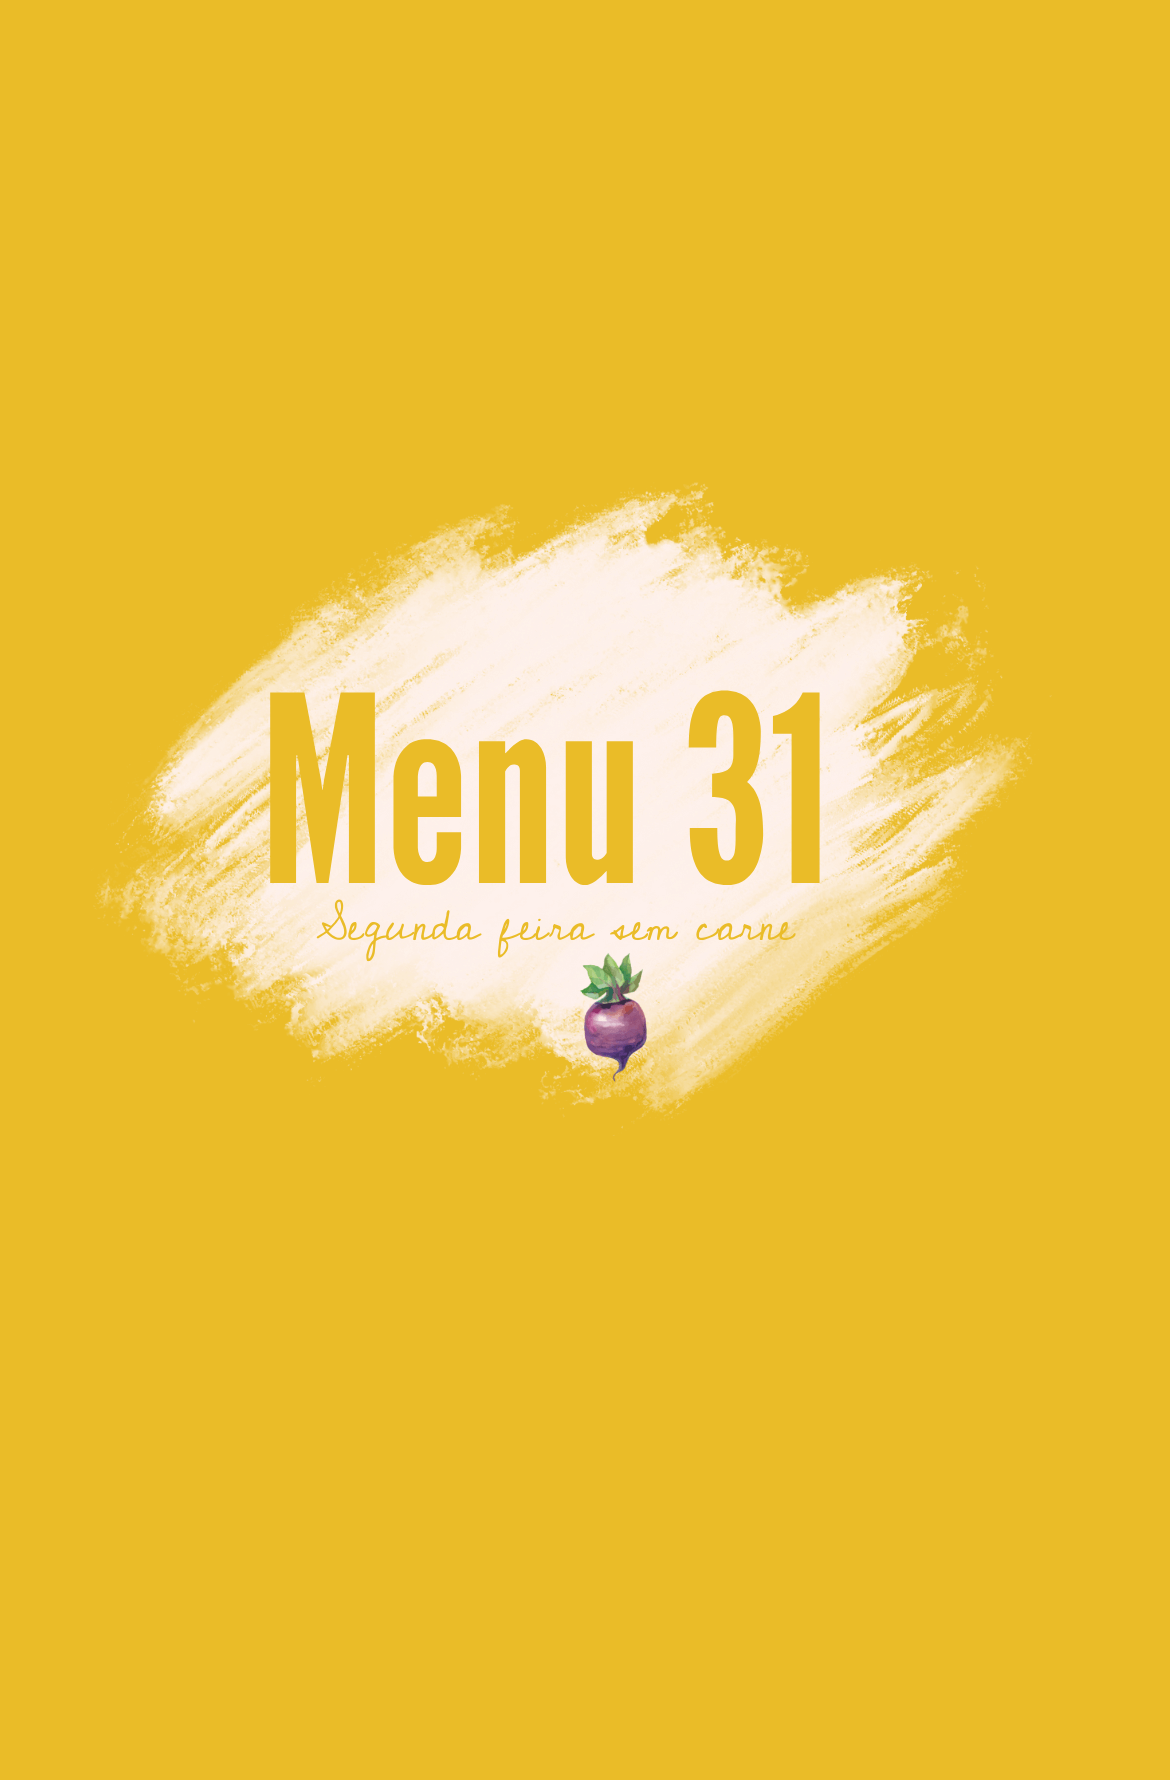 2as sem carne menu 31(movimento meatless monday)